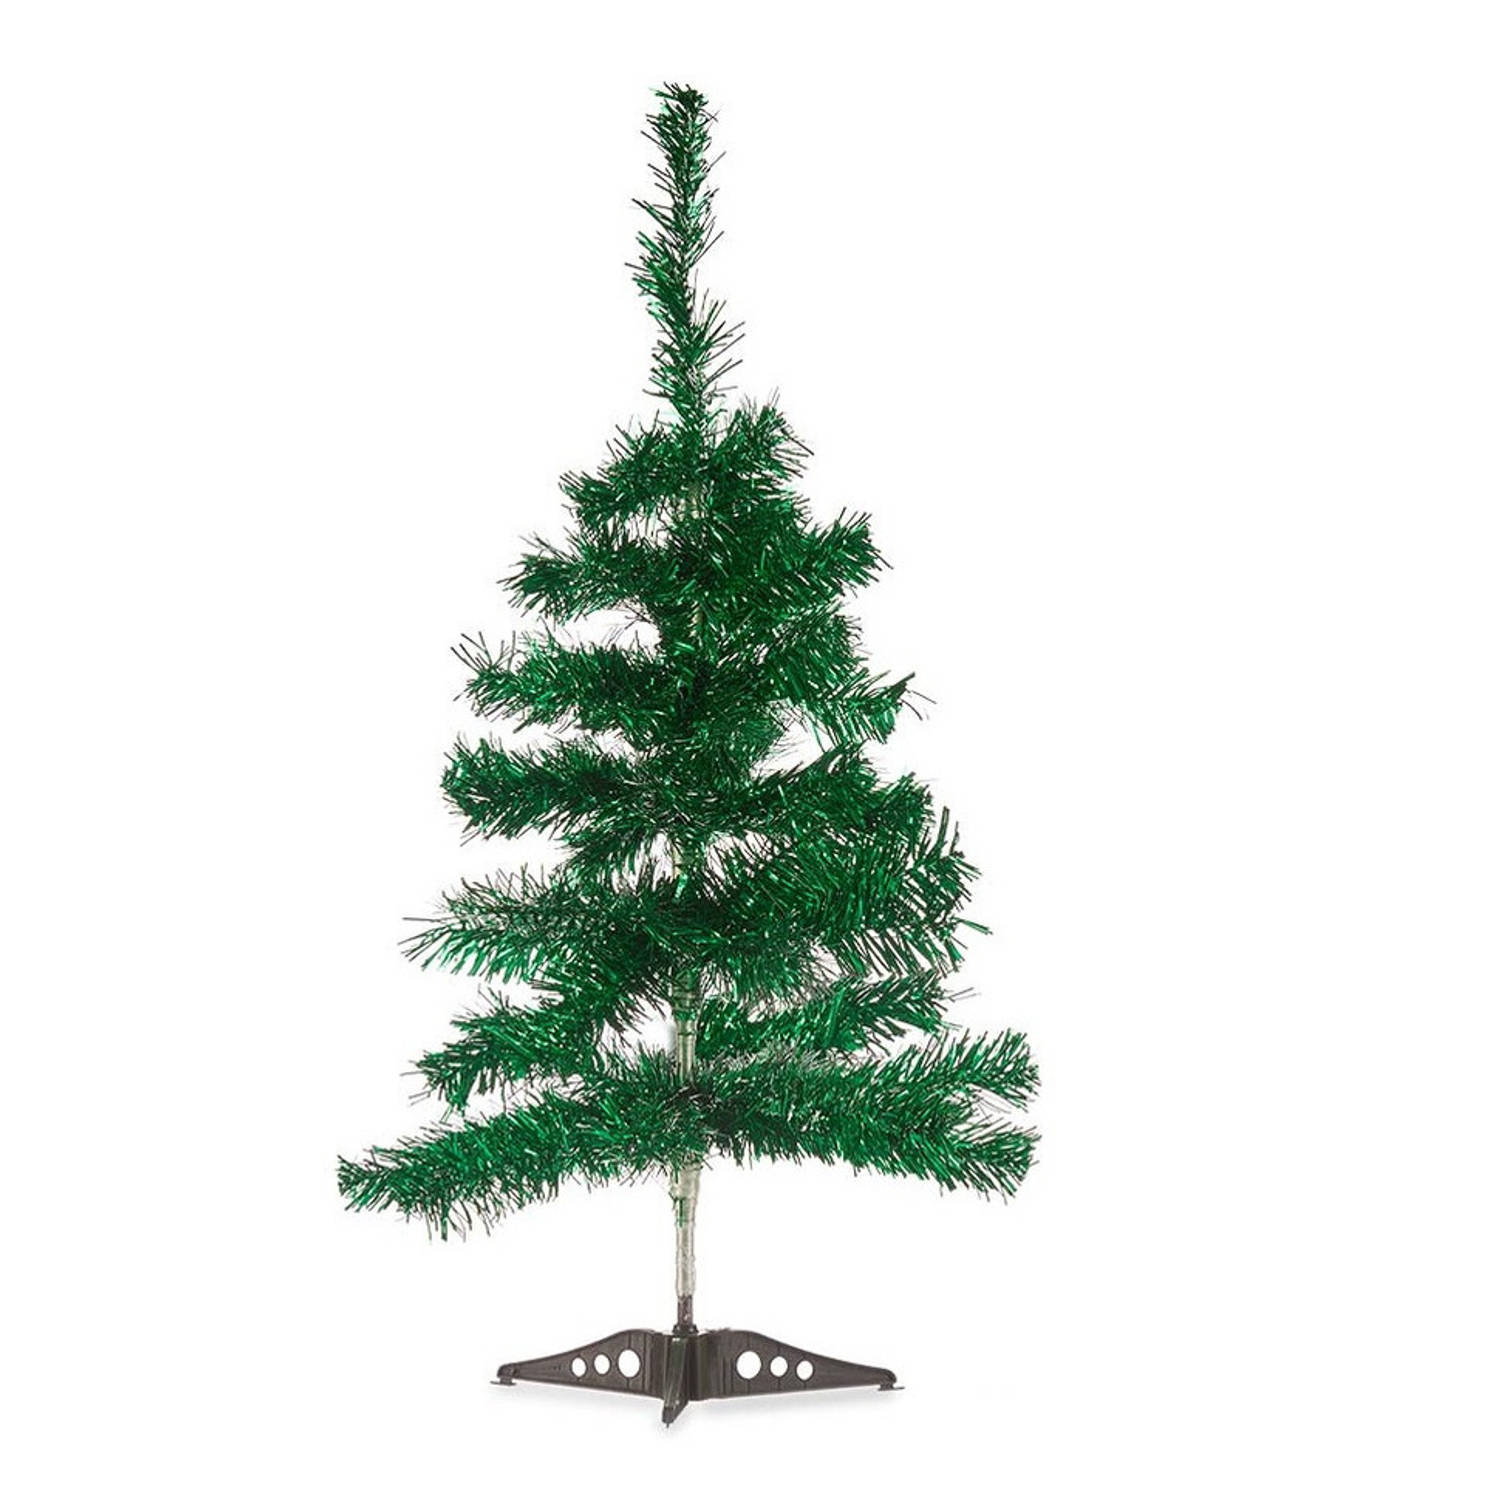 Krist+ kunstboom/kunst kerstboom - klein - groen - 60 cm - Kunstkerstboom